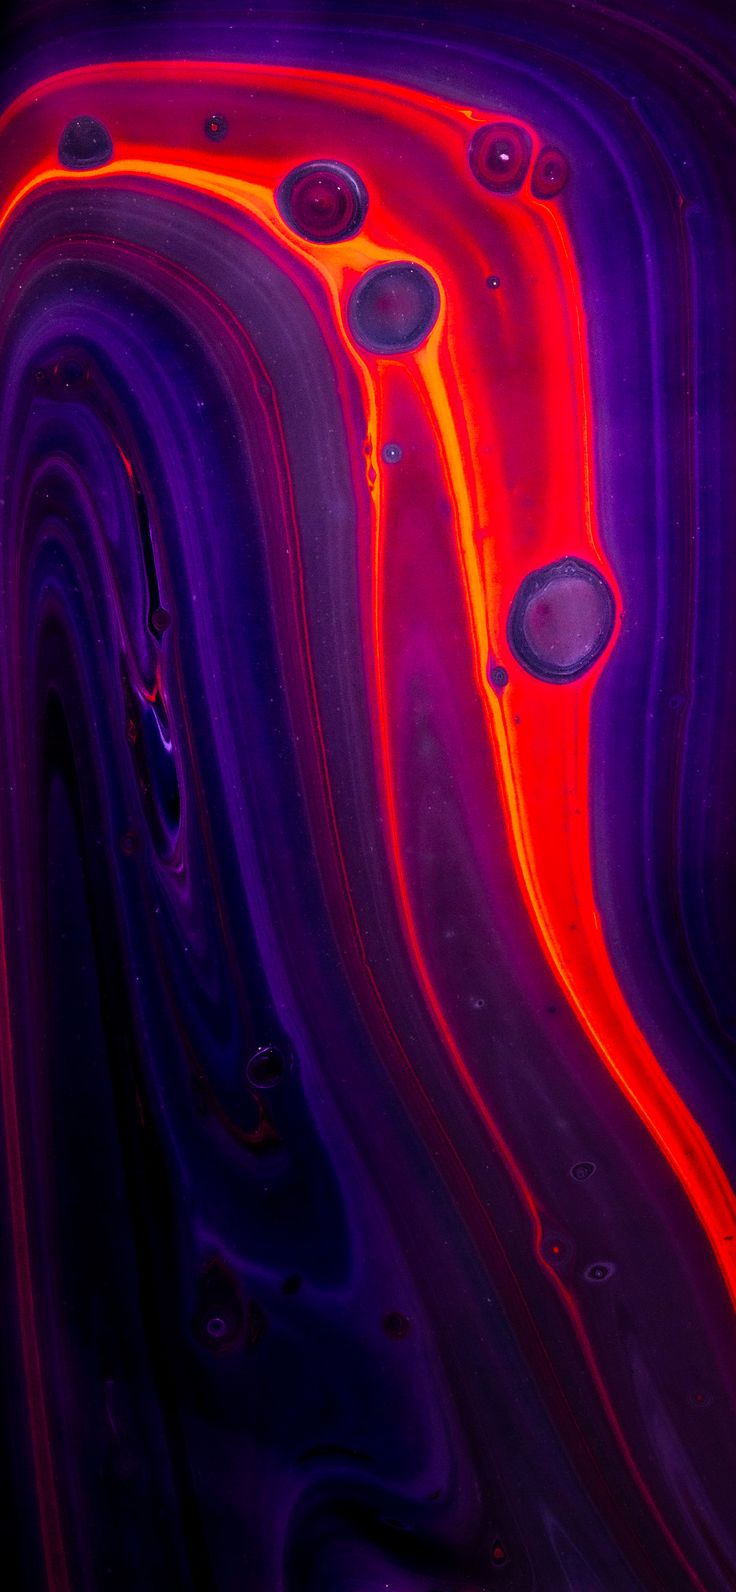 Red and Blue Liquids. iPhone wallpaper winter, Neon wallpaper, Slime wallpaper